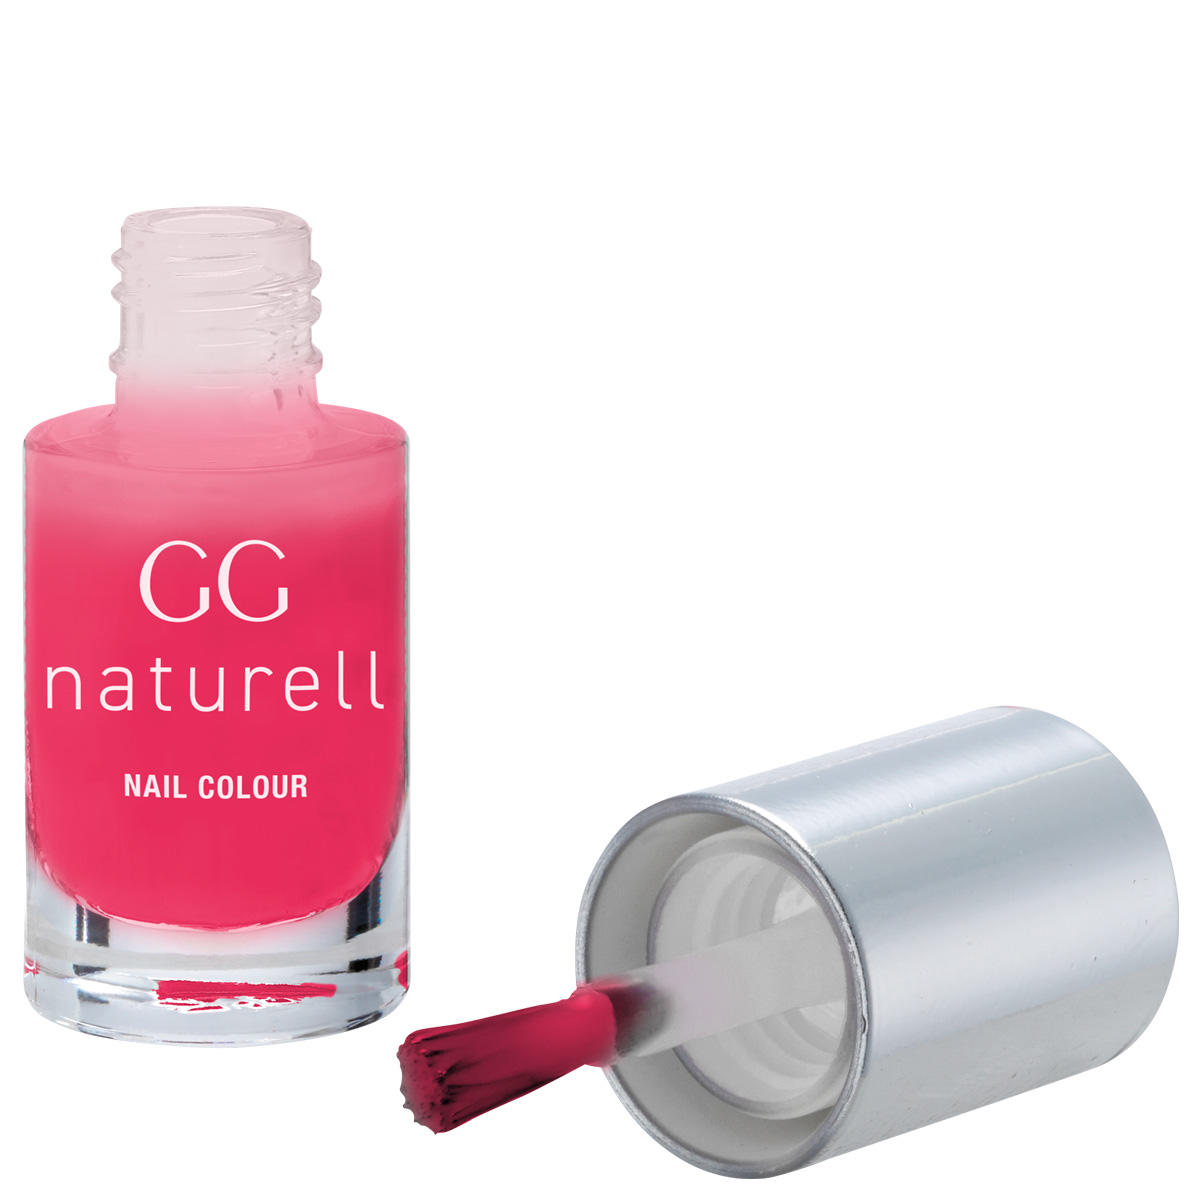 GERTRAUD GRUBER GG naturell Nail Colour  45 Pink 5 ml - 1